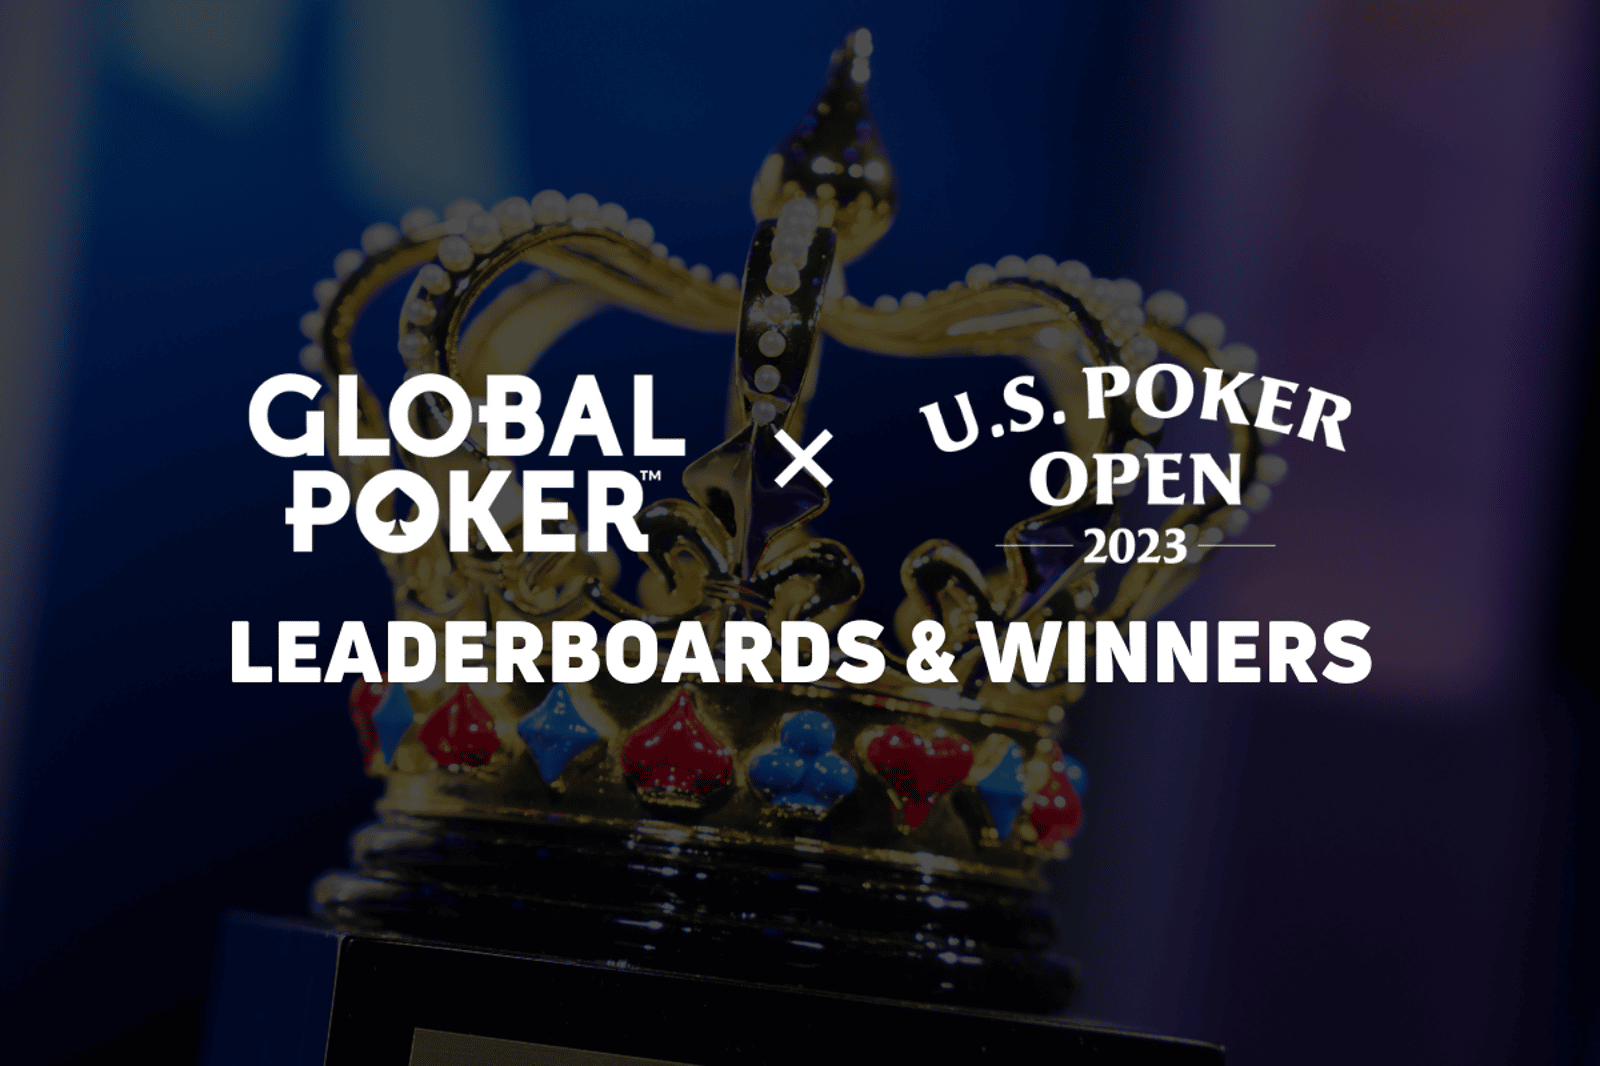 See the Global Poker 2023 U.S. Poker Open Online Results